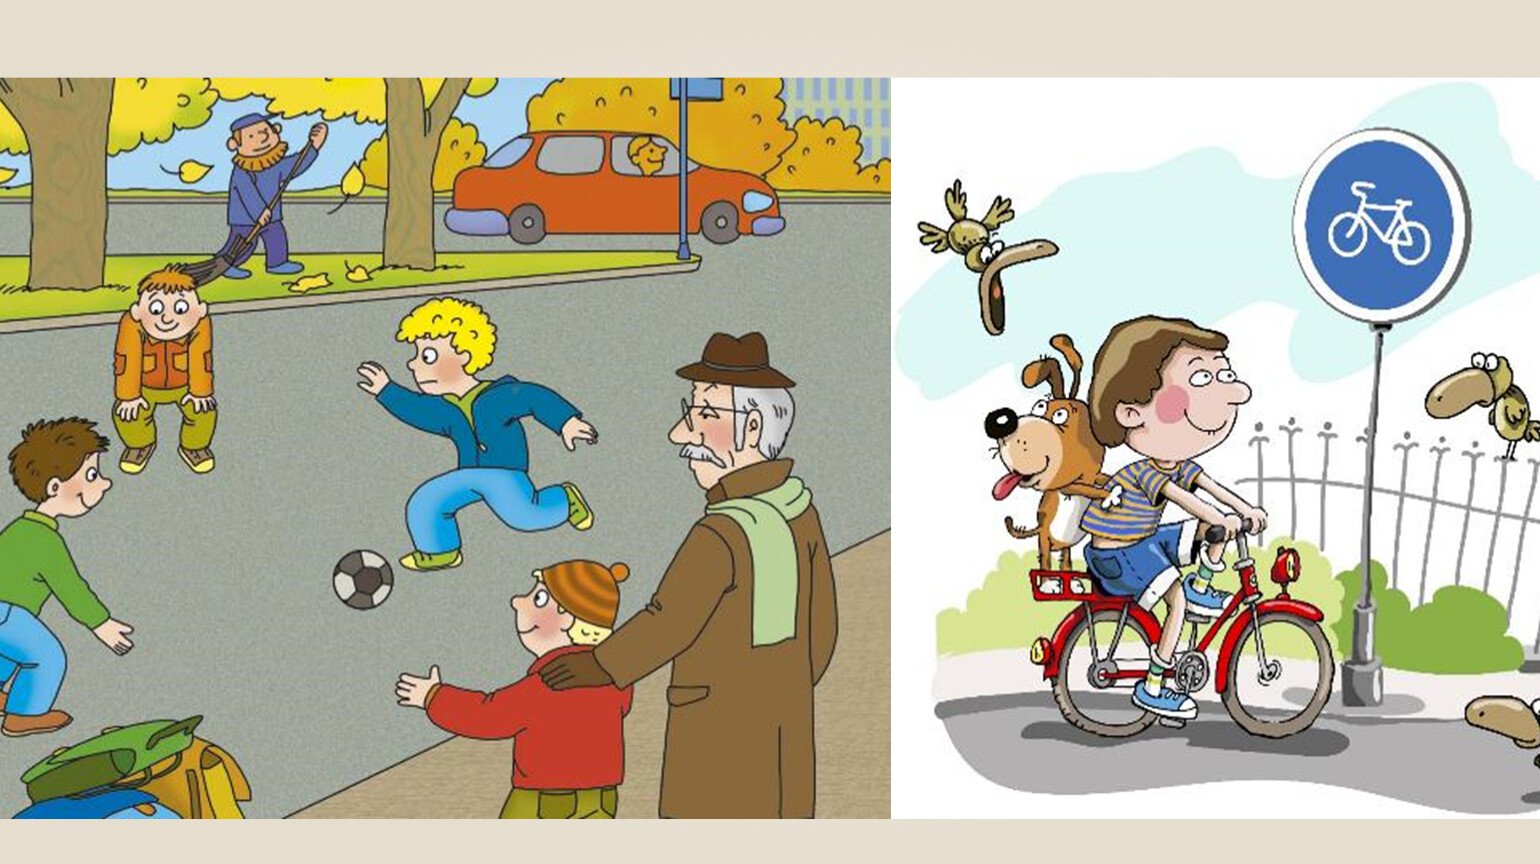 Ситуации во время игр на. Ситуации на дороге для детей. Безопасное поведение на улице для детей. Поведение на улице для детей. Безопасность на улице рисунок.